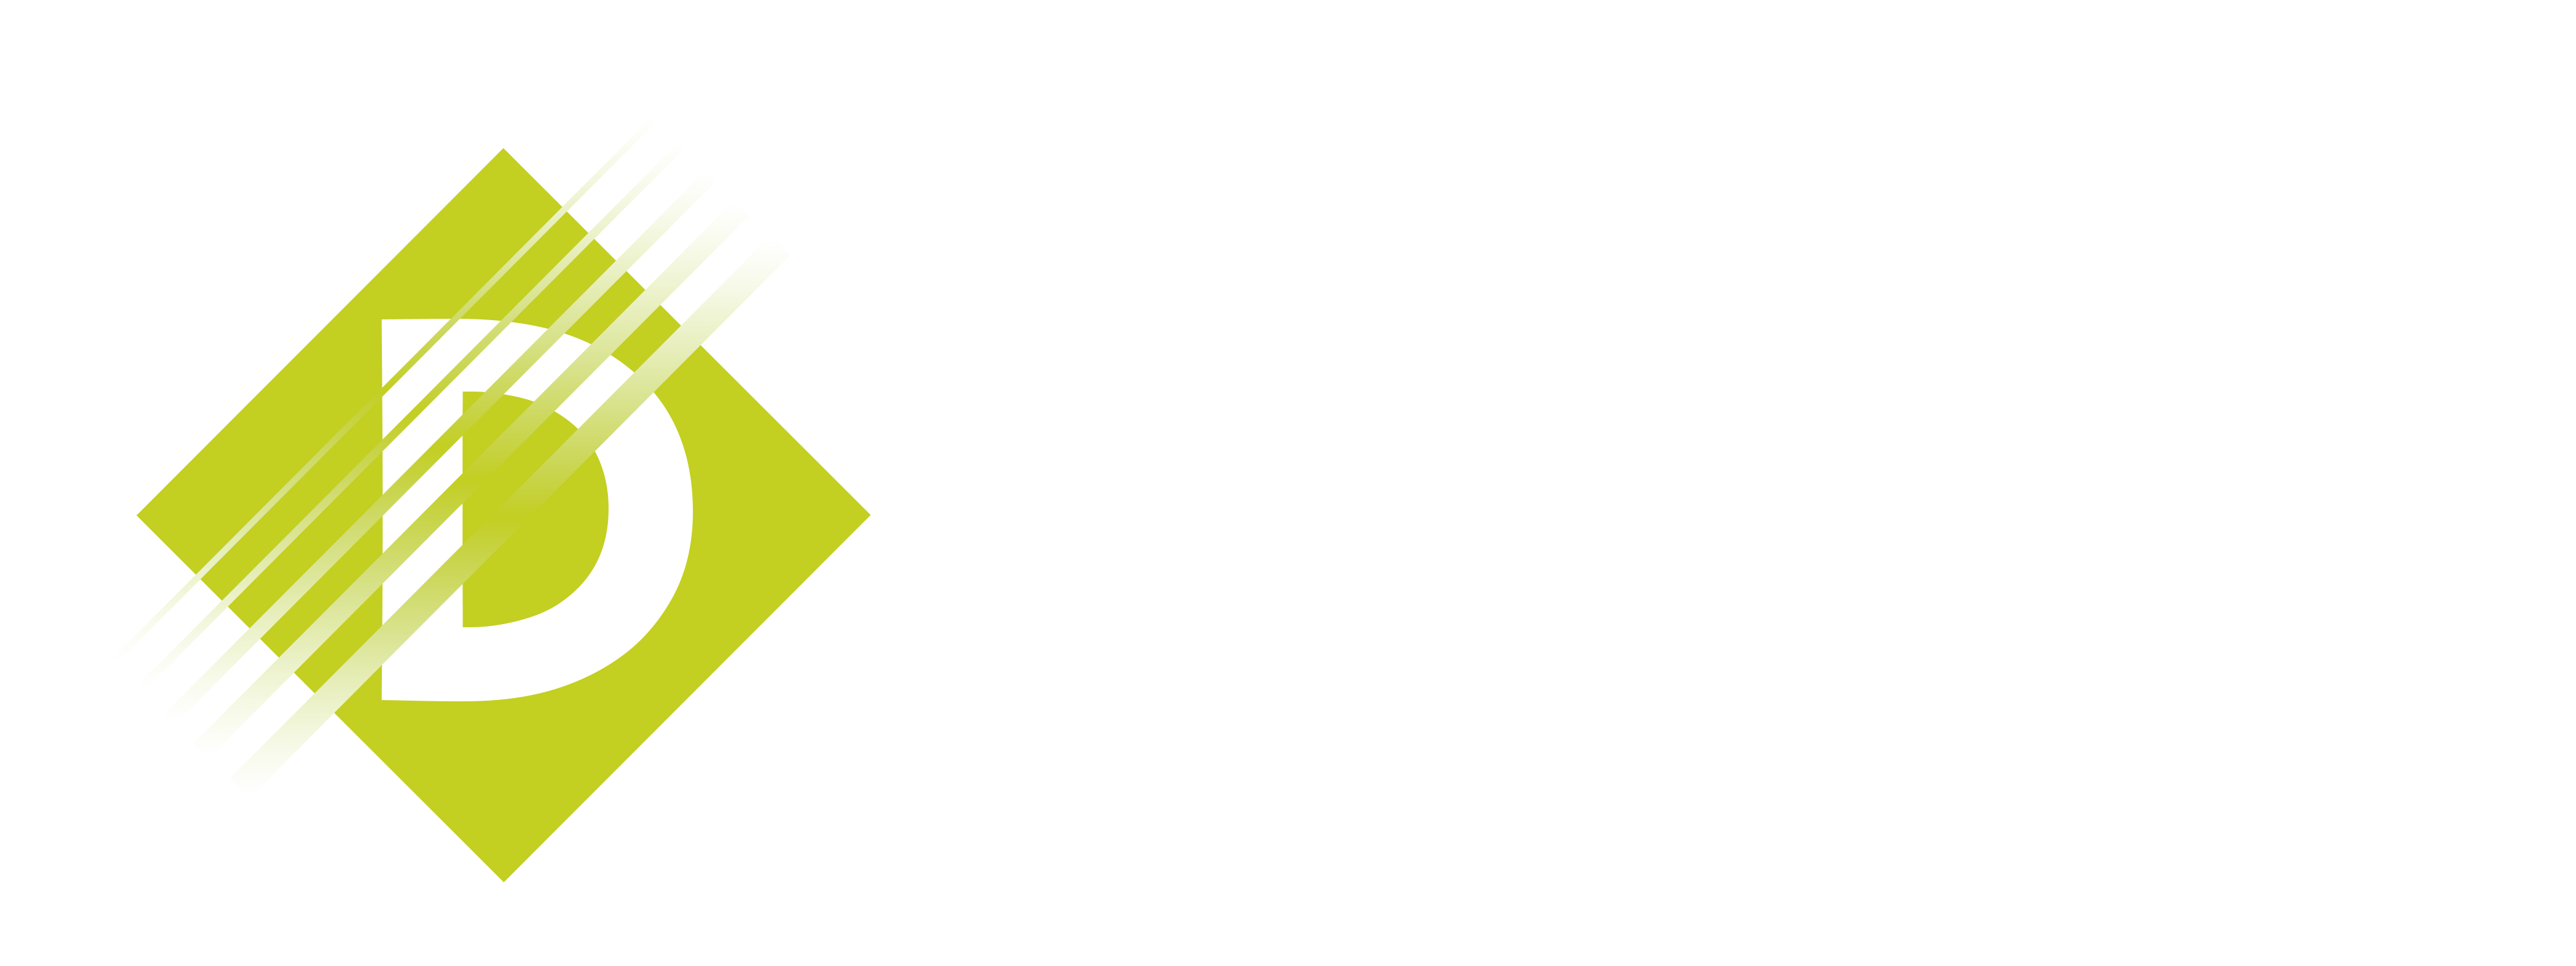 Dost Industries